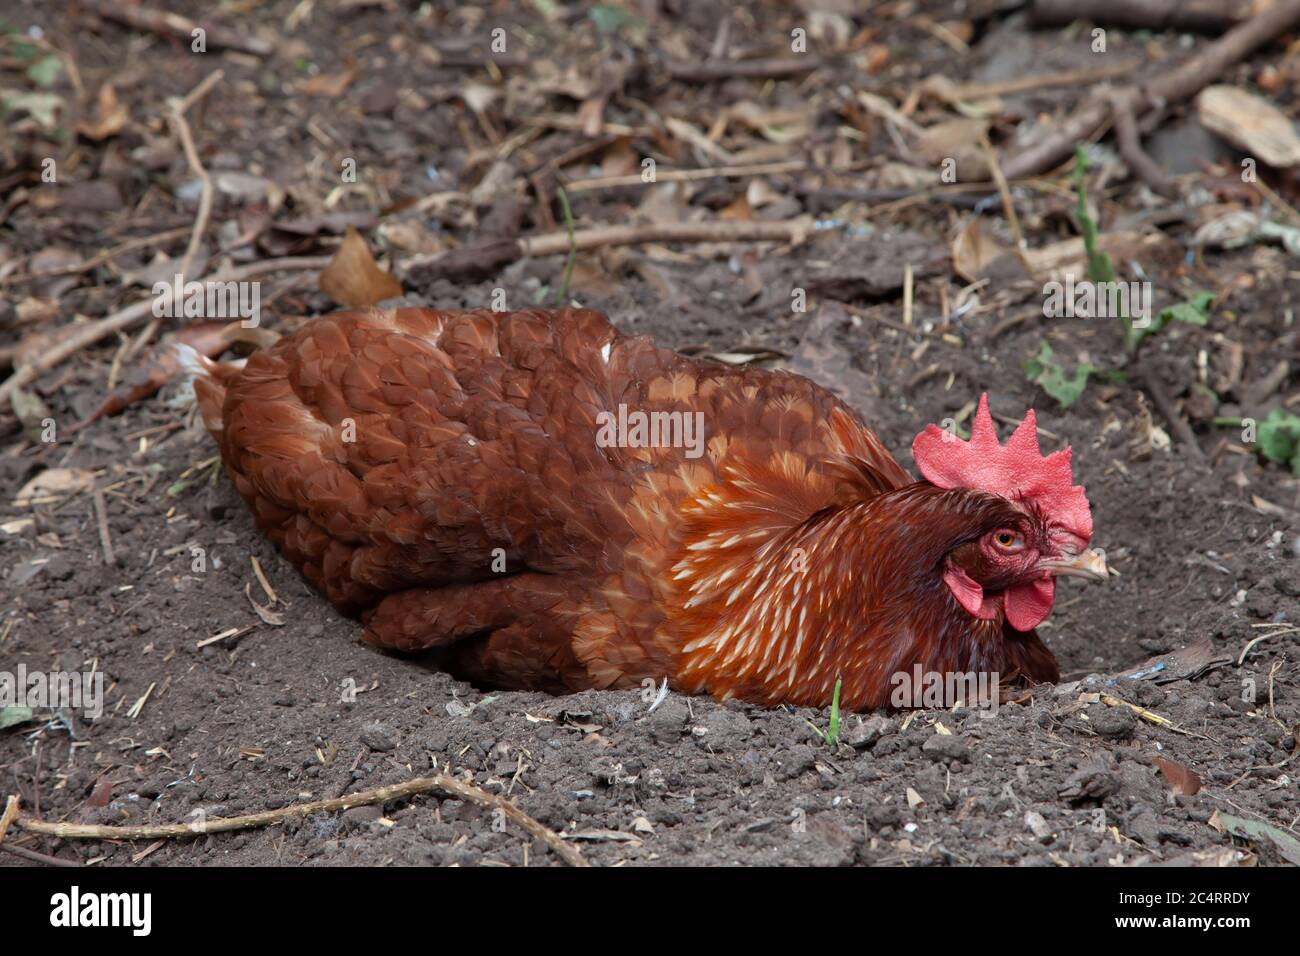 Brown hybrid hen dust bathing in back garden. British Isles Stock Photo